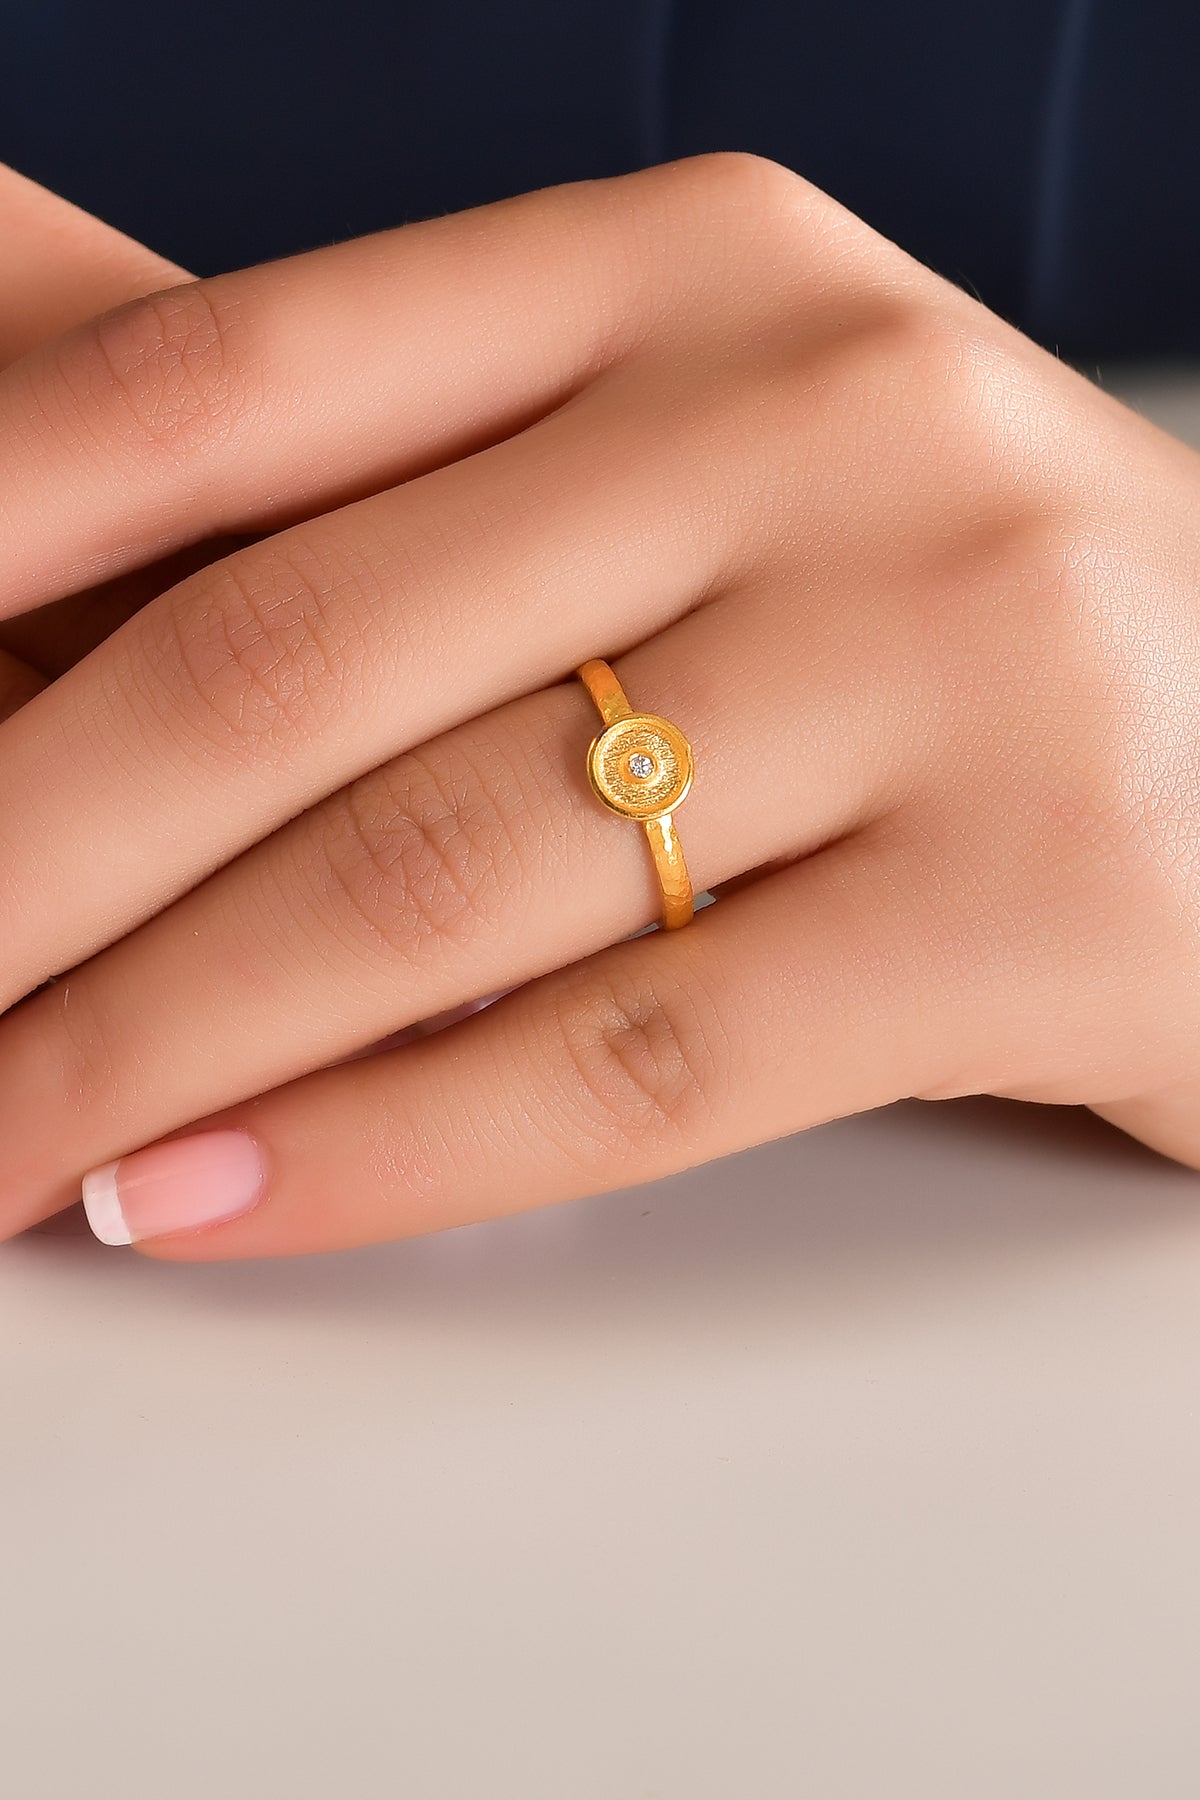 Best Engagement Rings to Buy Under 5k - Diamondere Blog